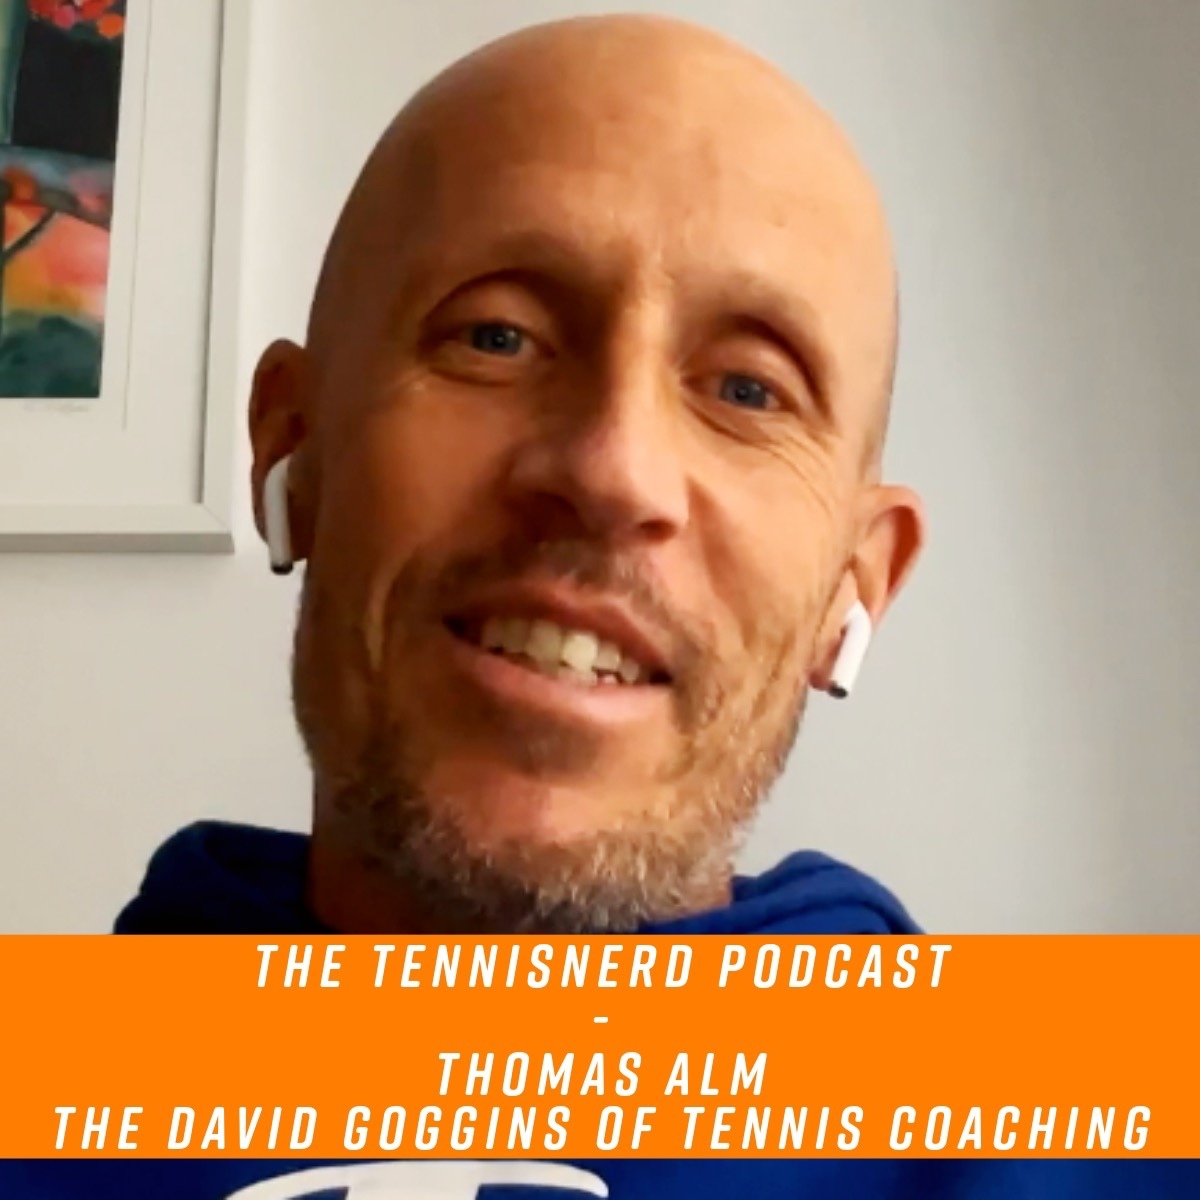 Thomas Alm is the David Goggins of tennis